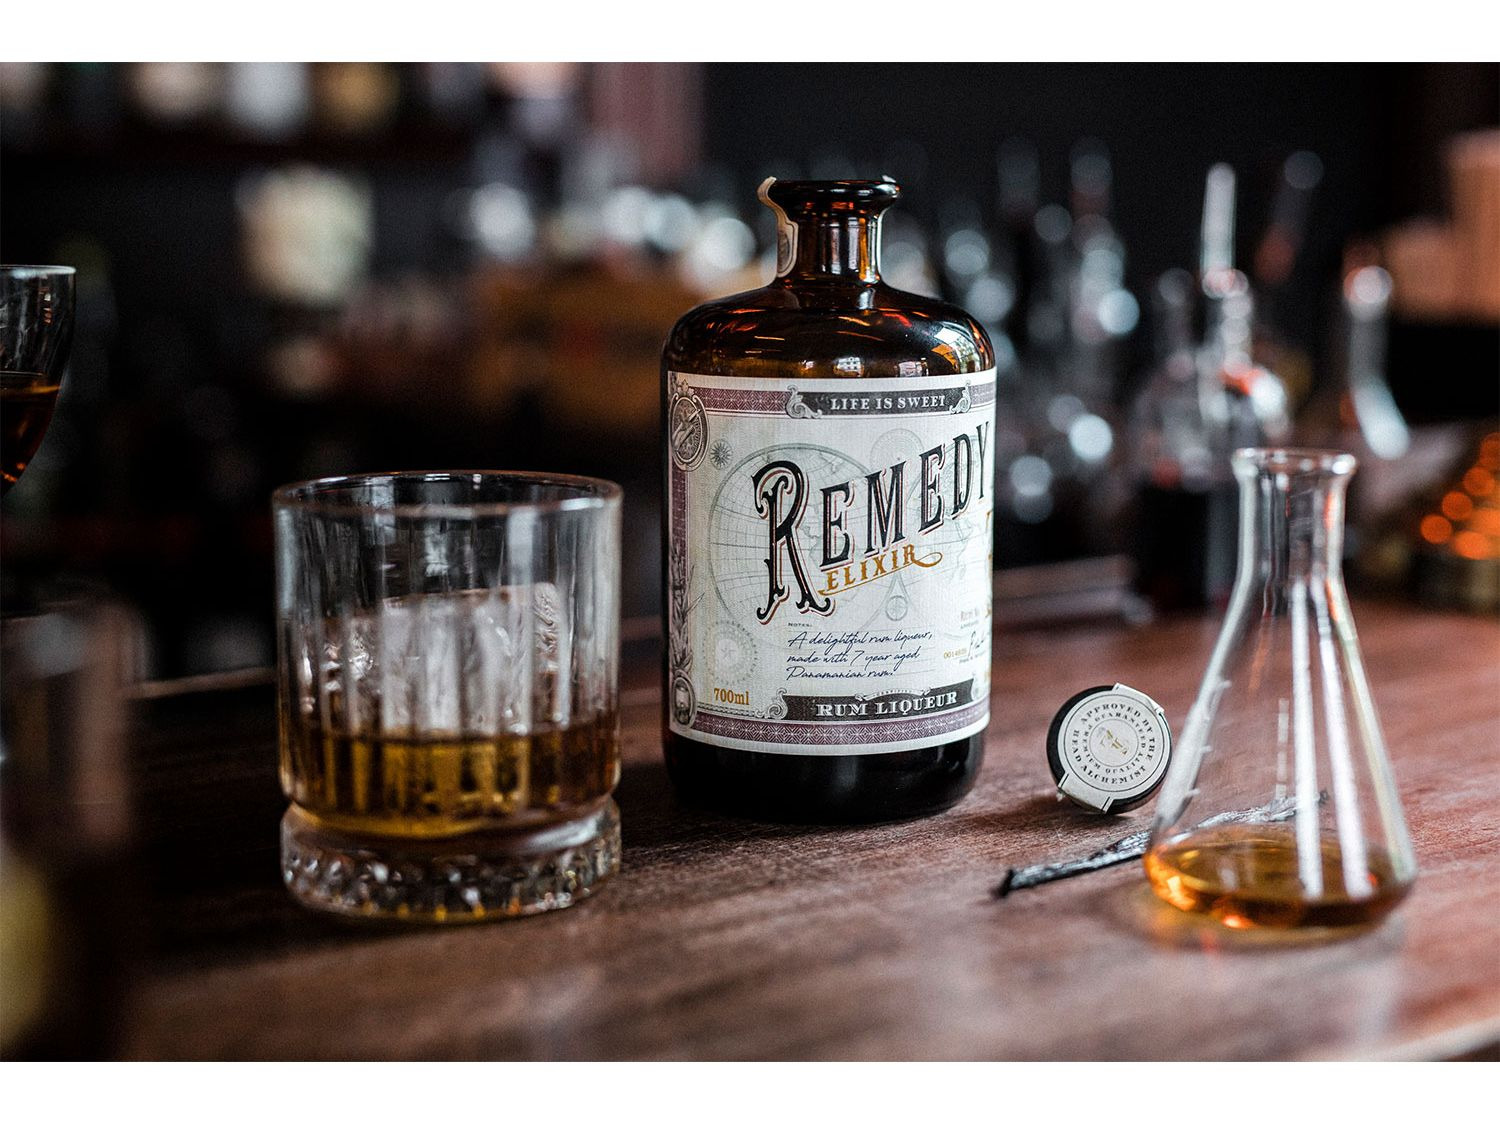 Remedy Elixir 34% | LIDL Vol kaufen online